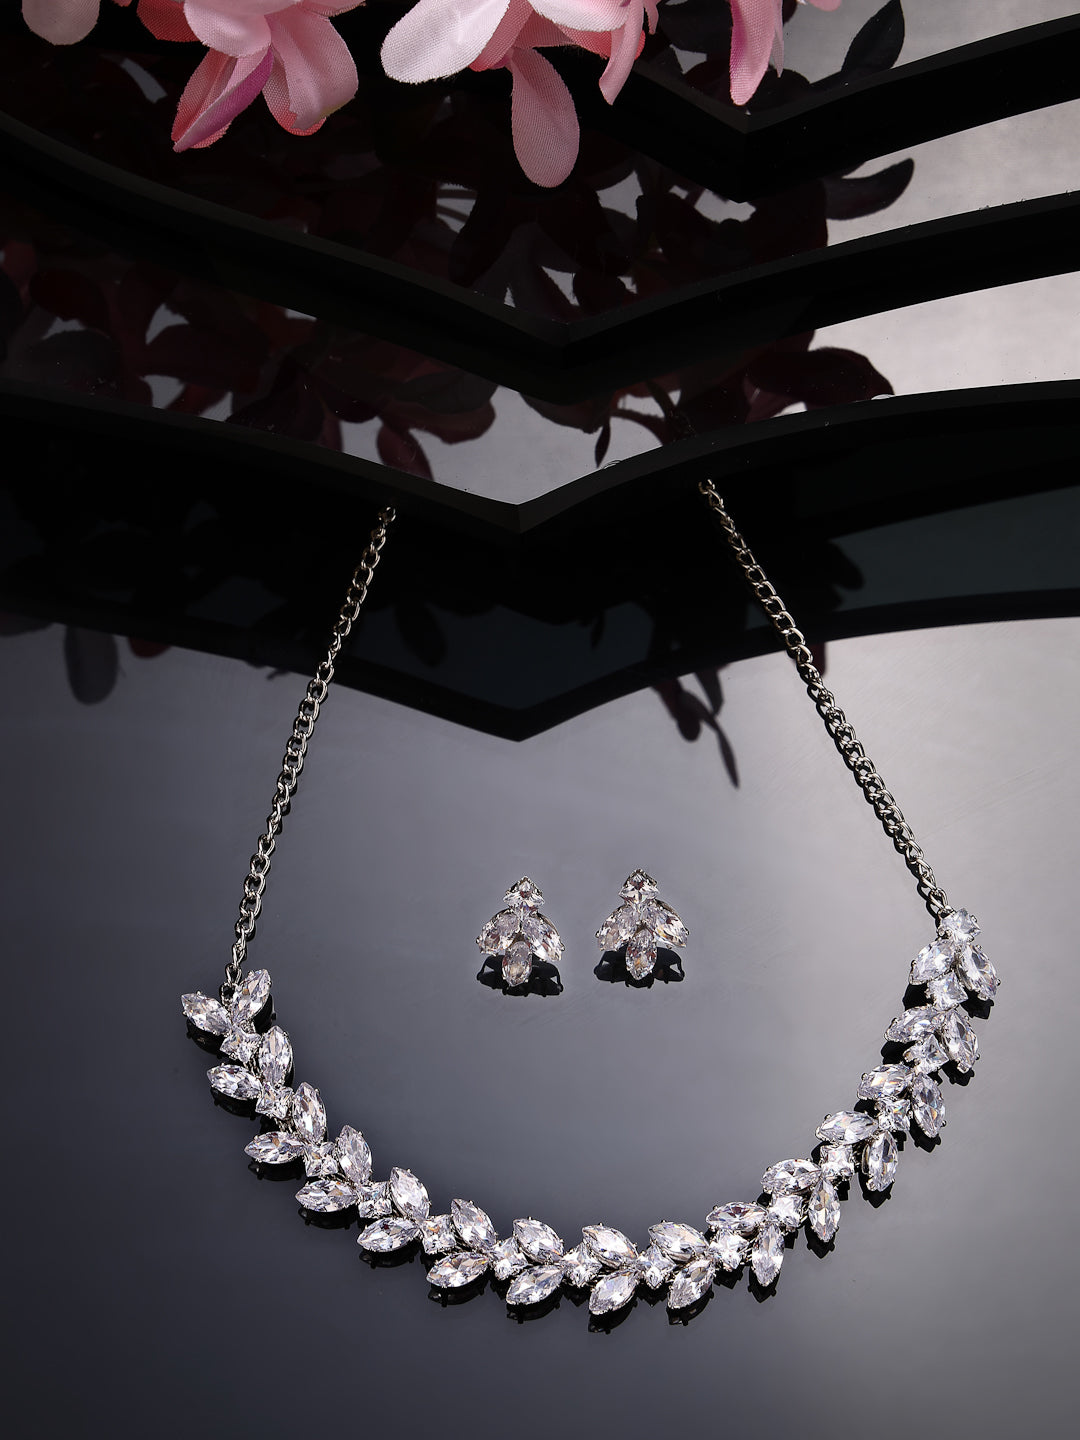 Women's Silver-Plated American Diamond Jewellery Set Necklace & Earrings - NVR